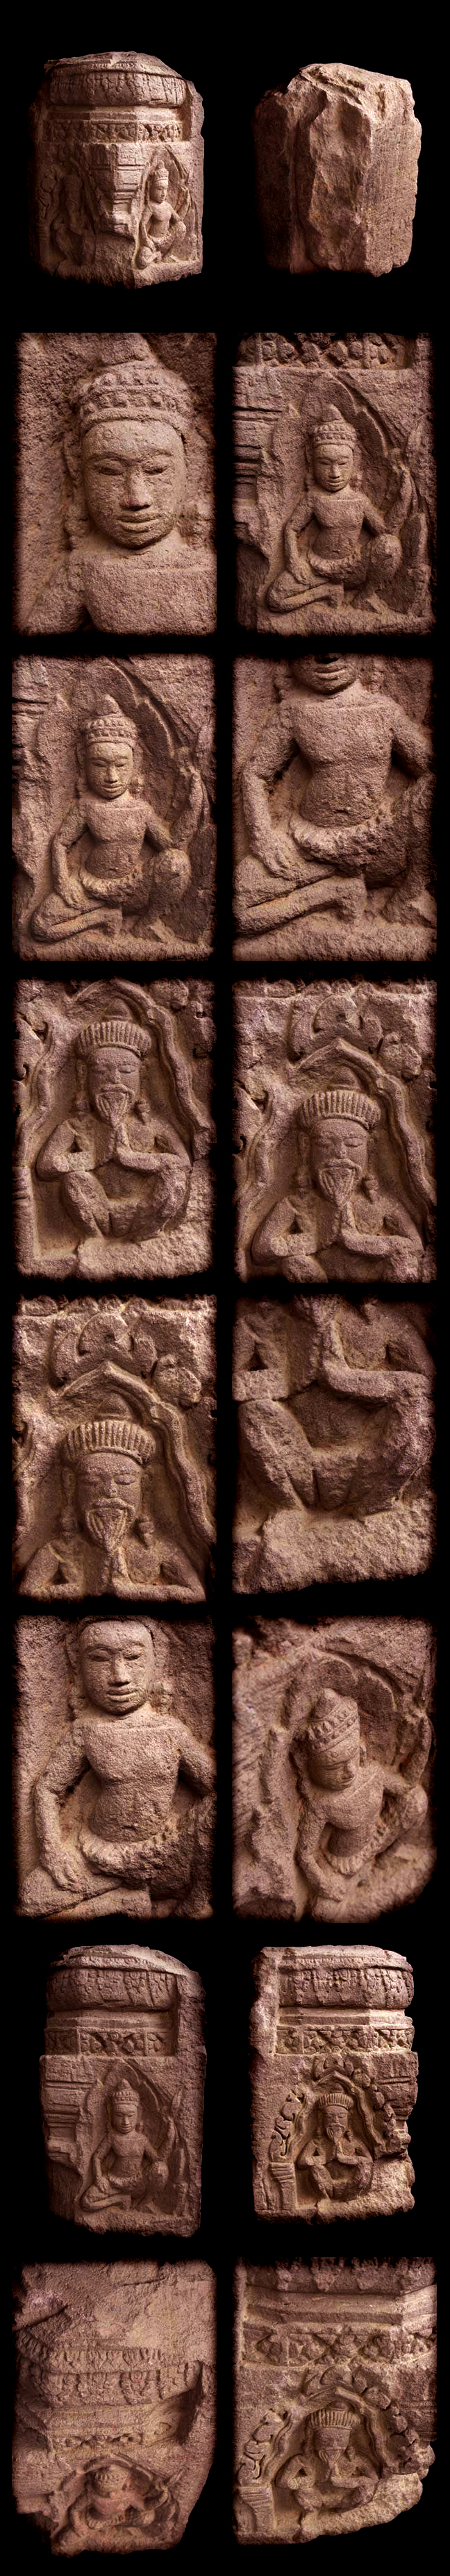 Extremely Rare 12C Sandstone Khmer Stele #ACK.004